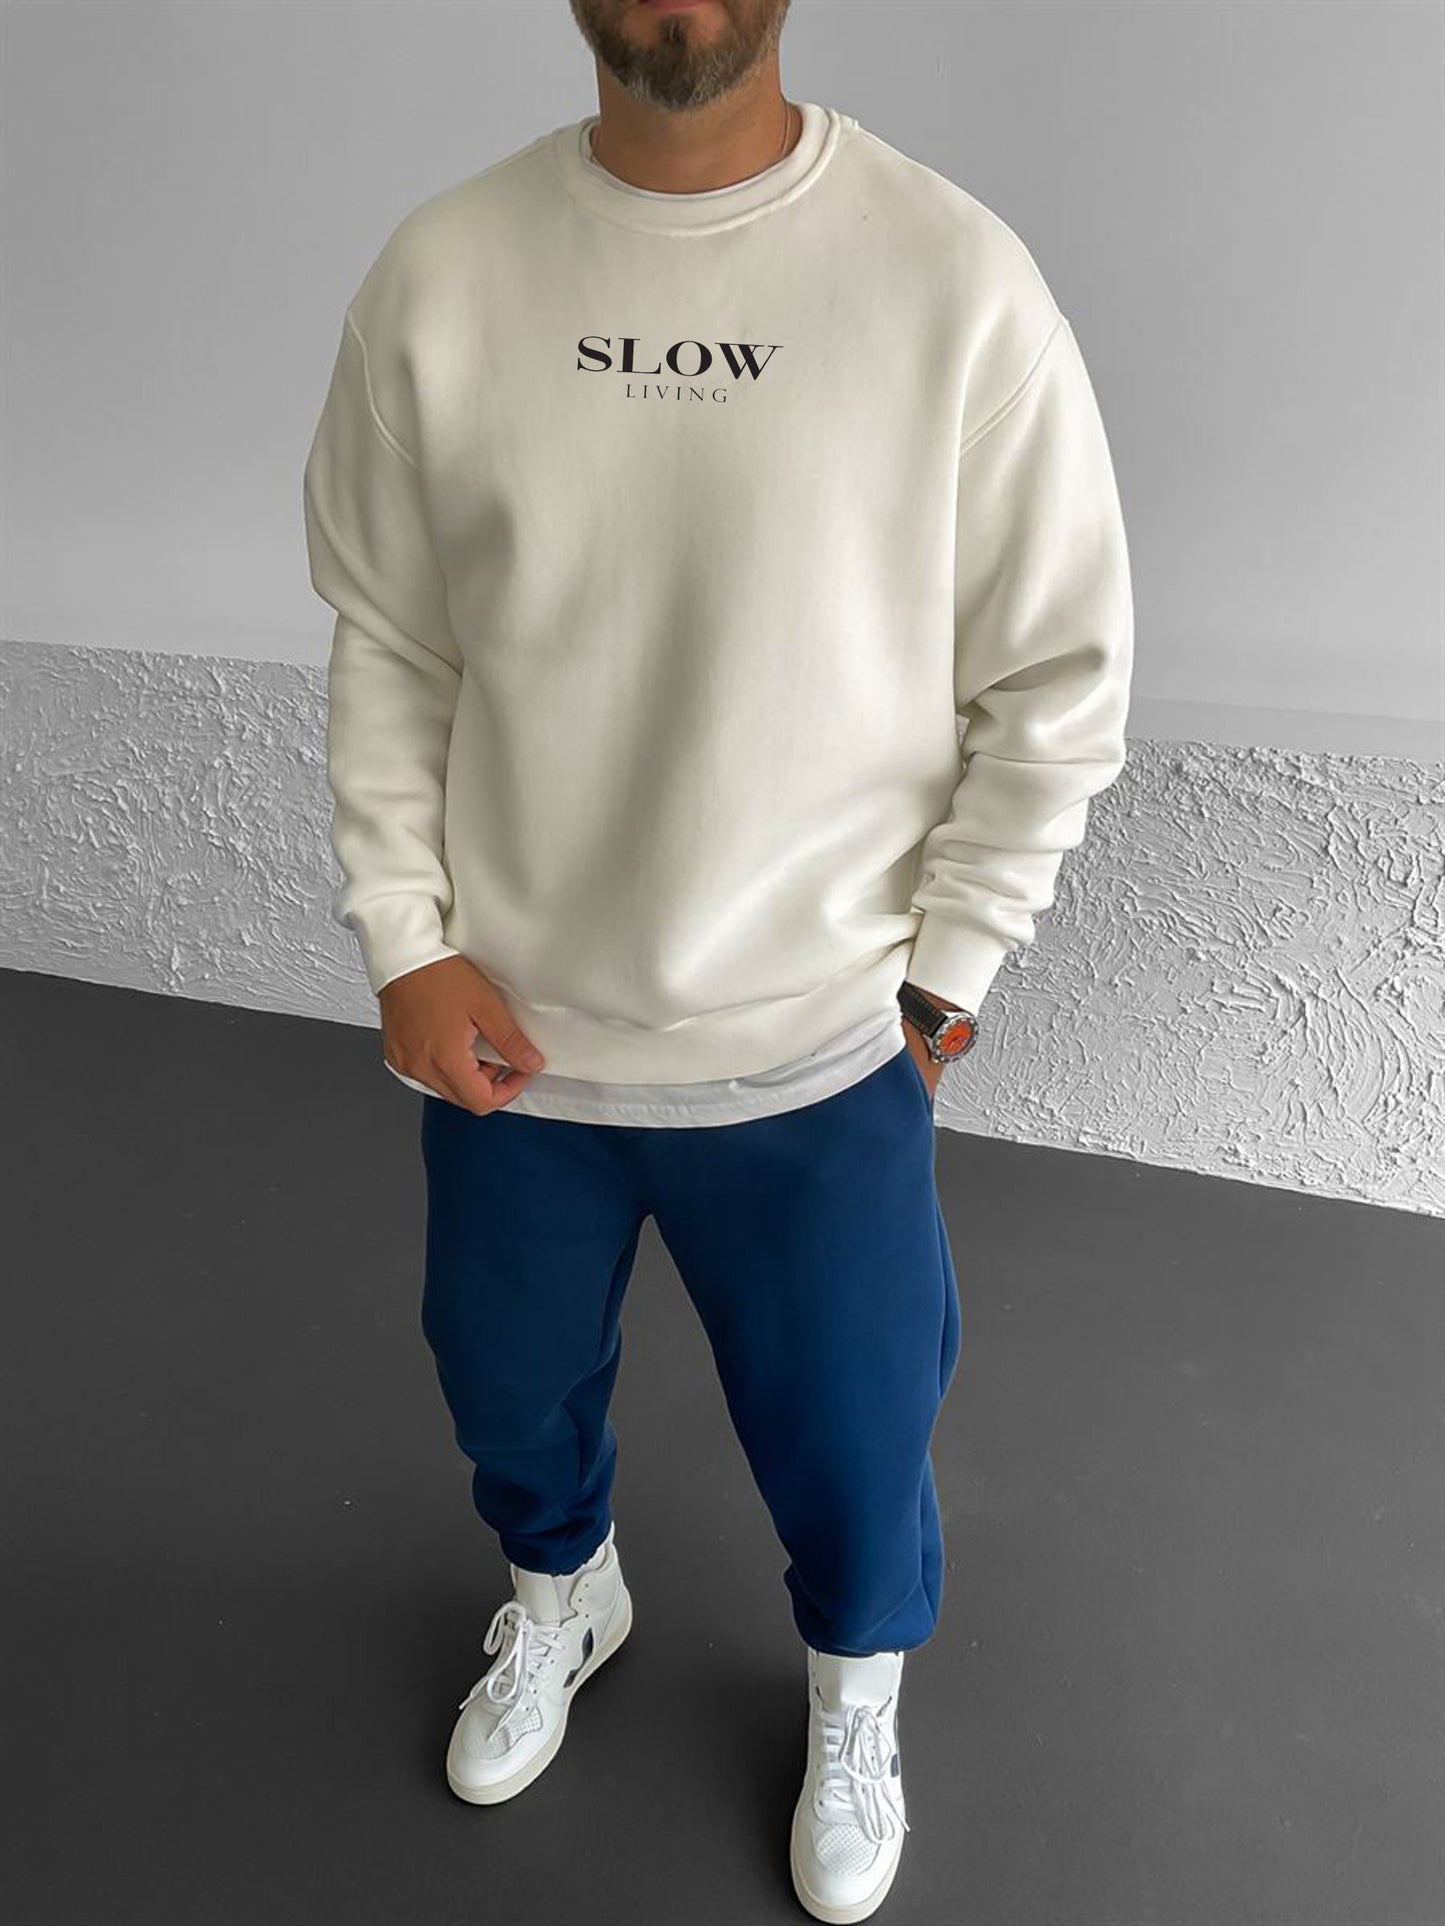 Off-White "Slow Living" Printed Oversize Sweatshirt